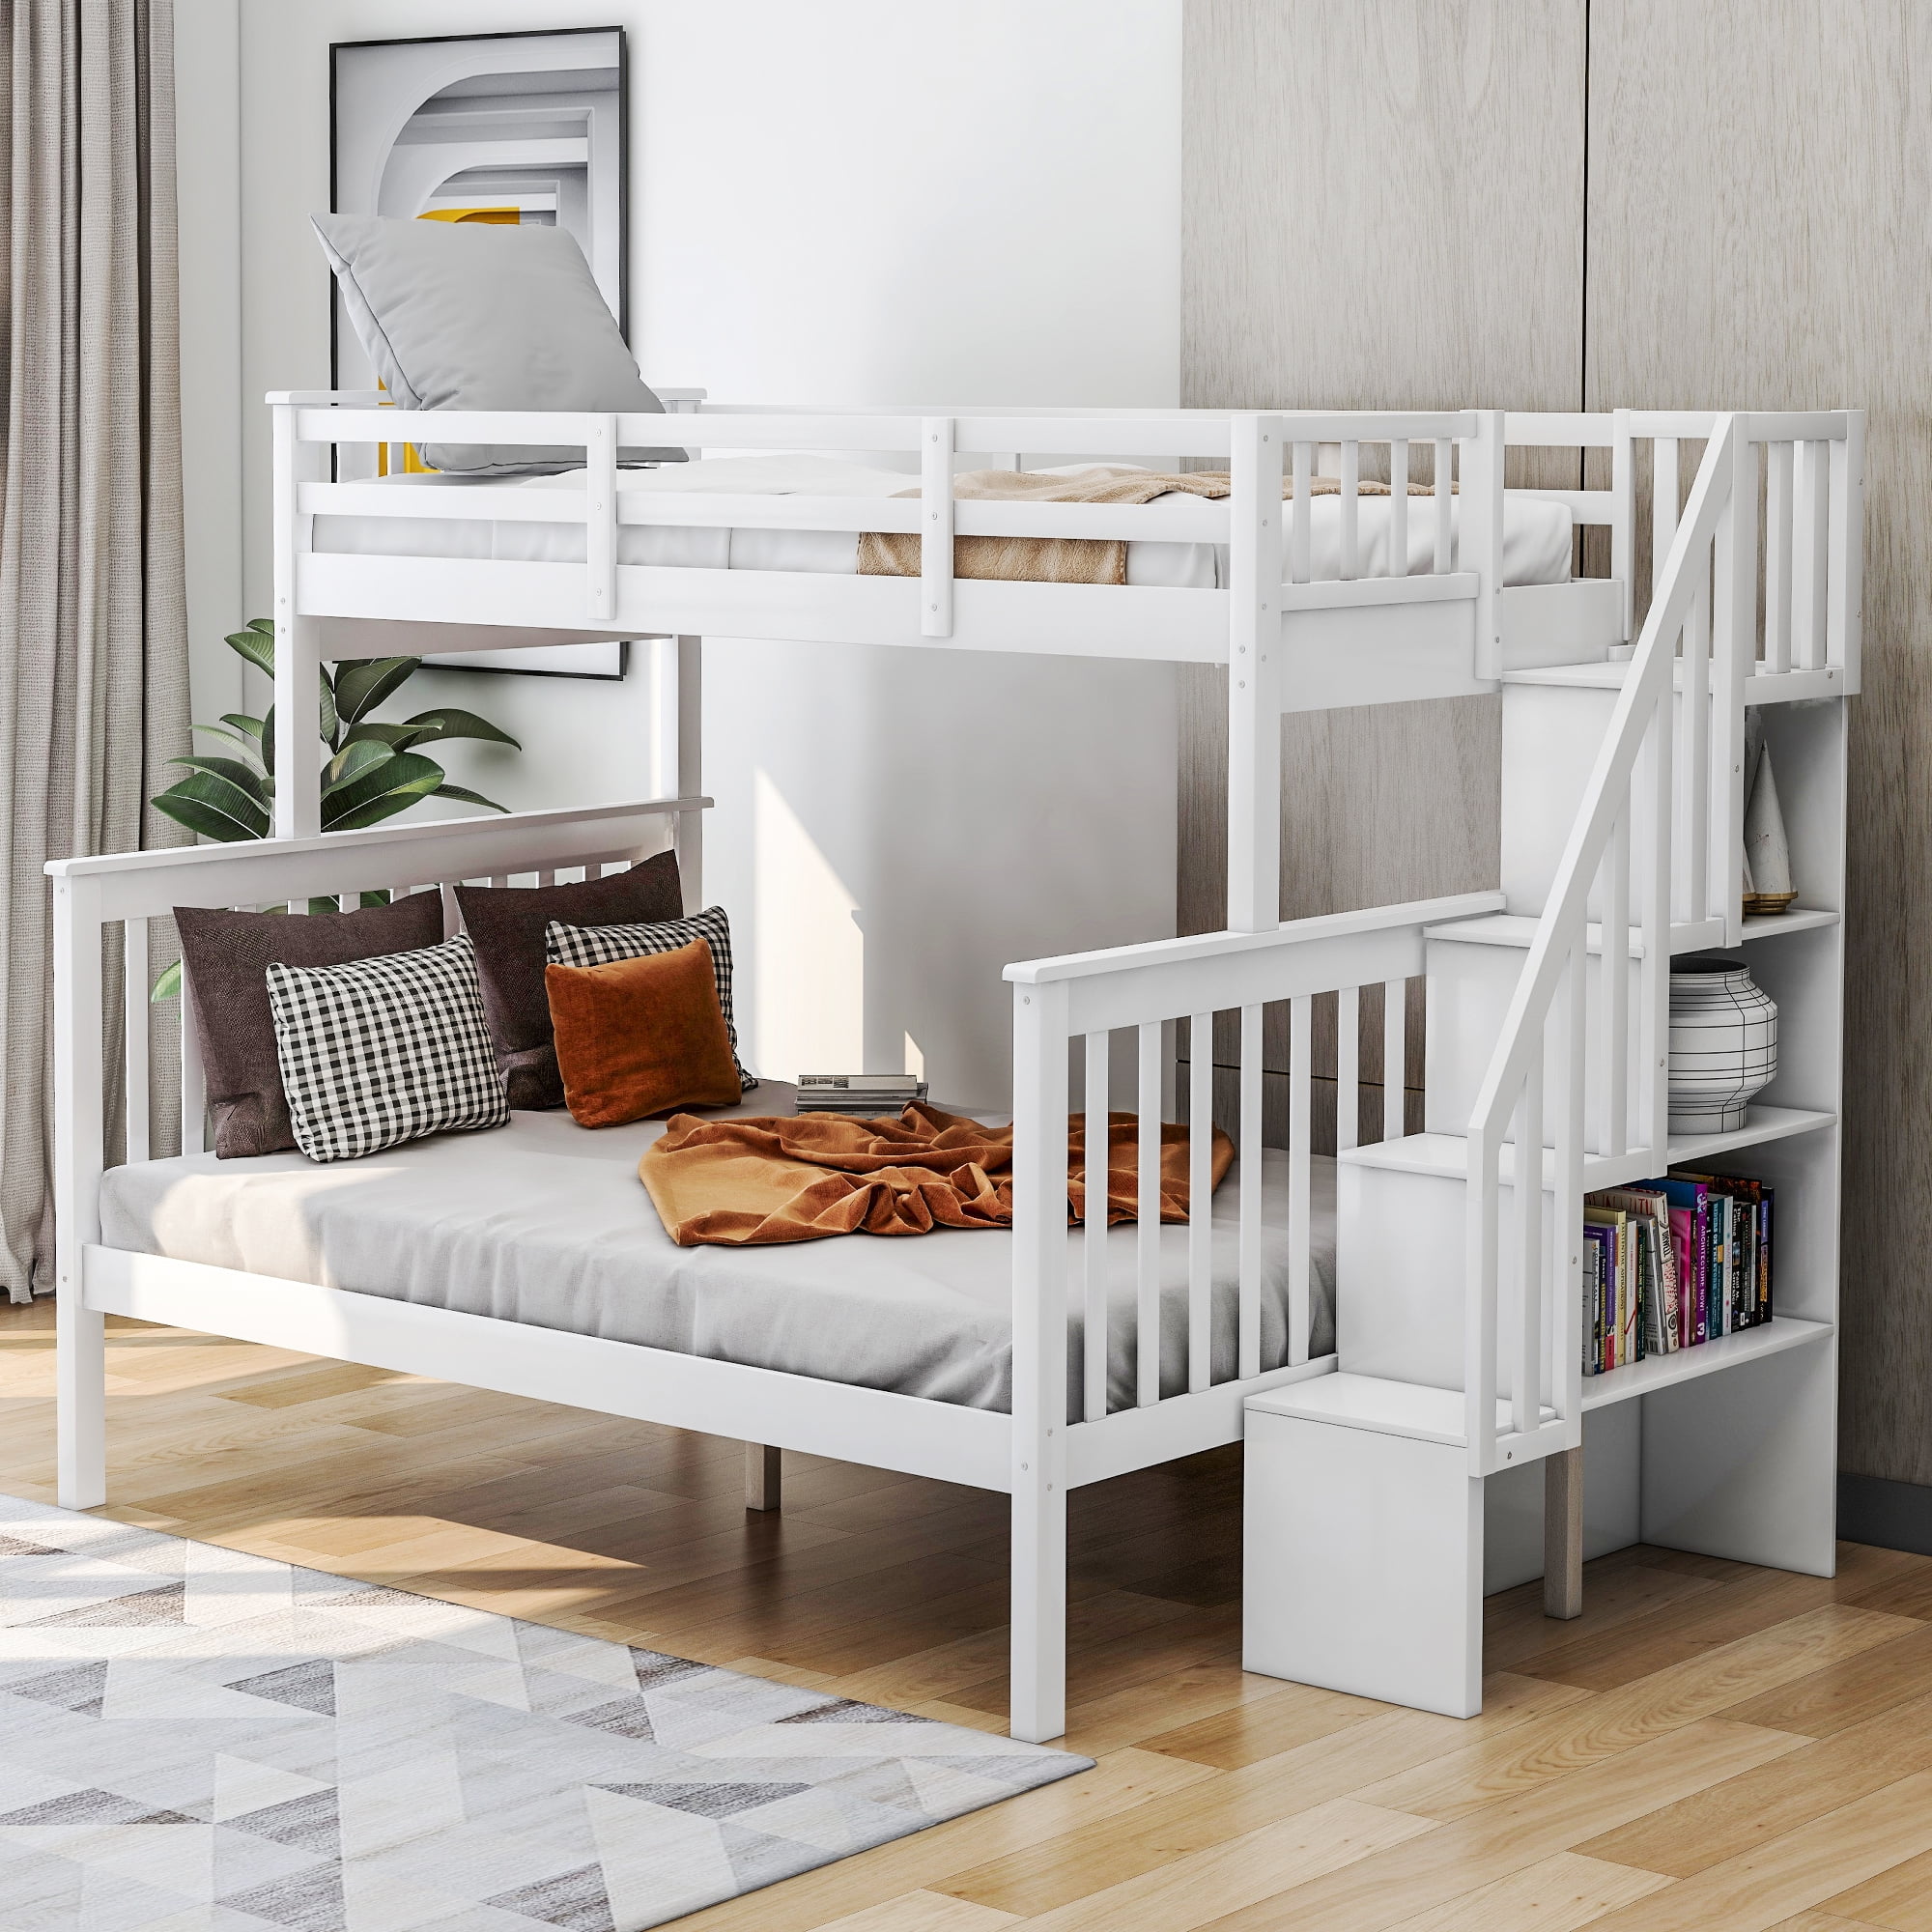 Bedroom Hardwood Bunk Bed Frame, Double Full Size Bunk Beds